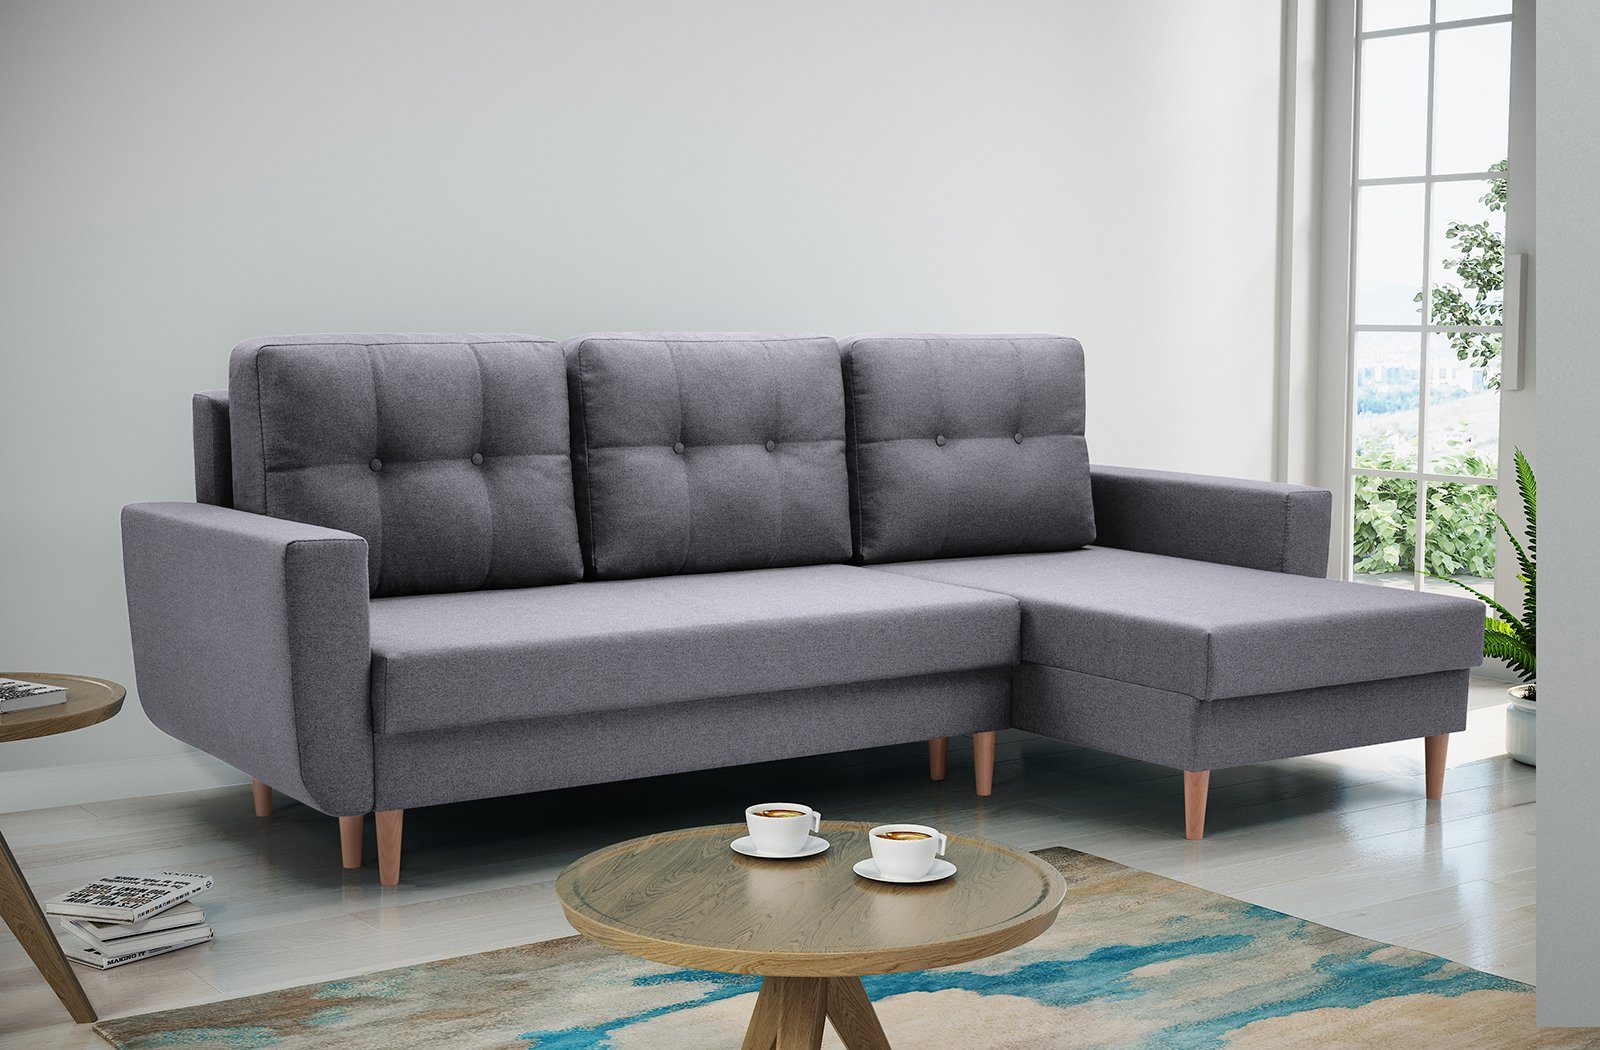 Beautysofa Polsterecke Couch Sofa Ecksofa Schlaffunktion, mit (malmo ONLY, Dunkelgrau universelle mit 95) new mane